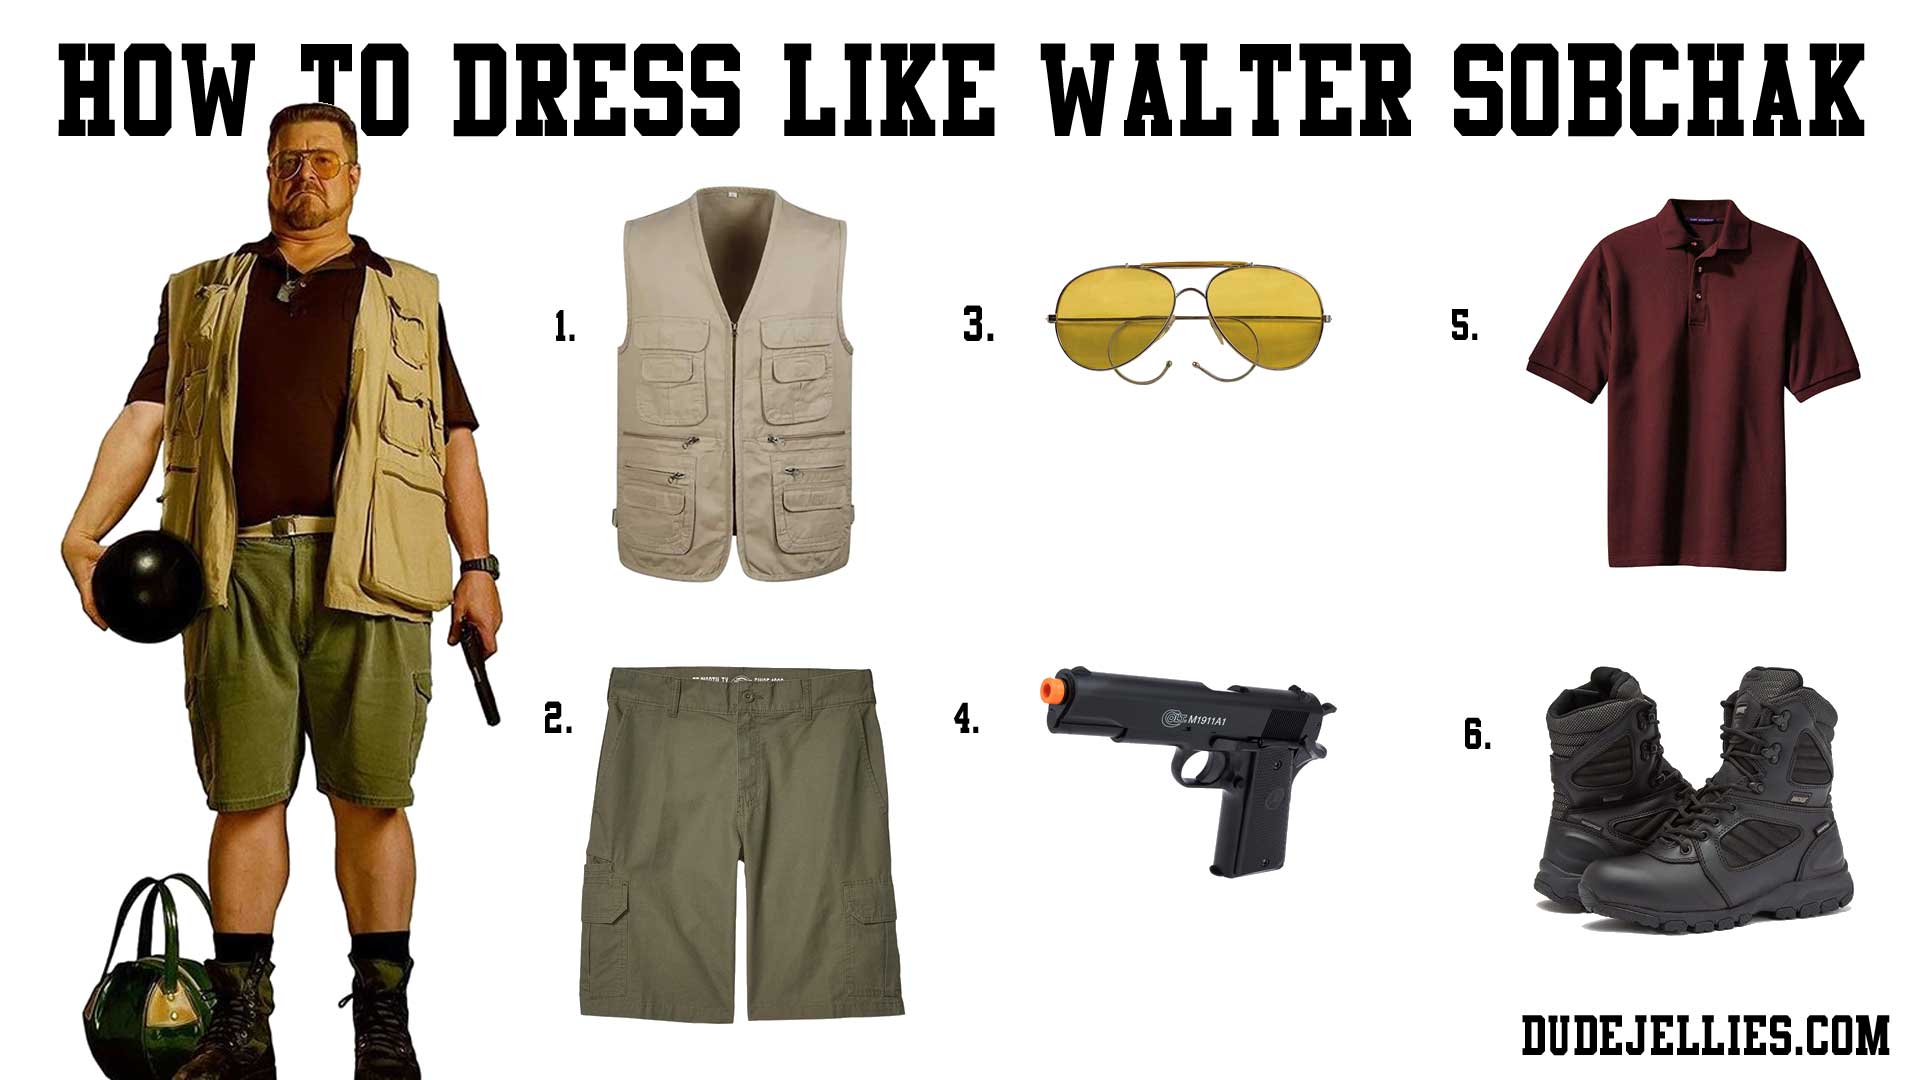 The Big Lebowski Walter Sobchak Costume Guide<br />
